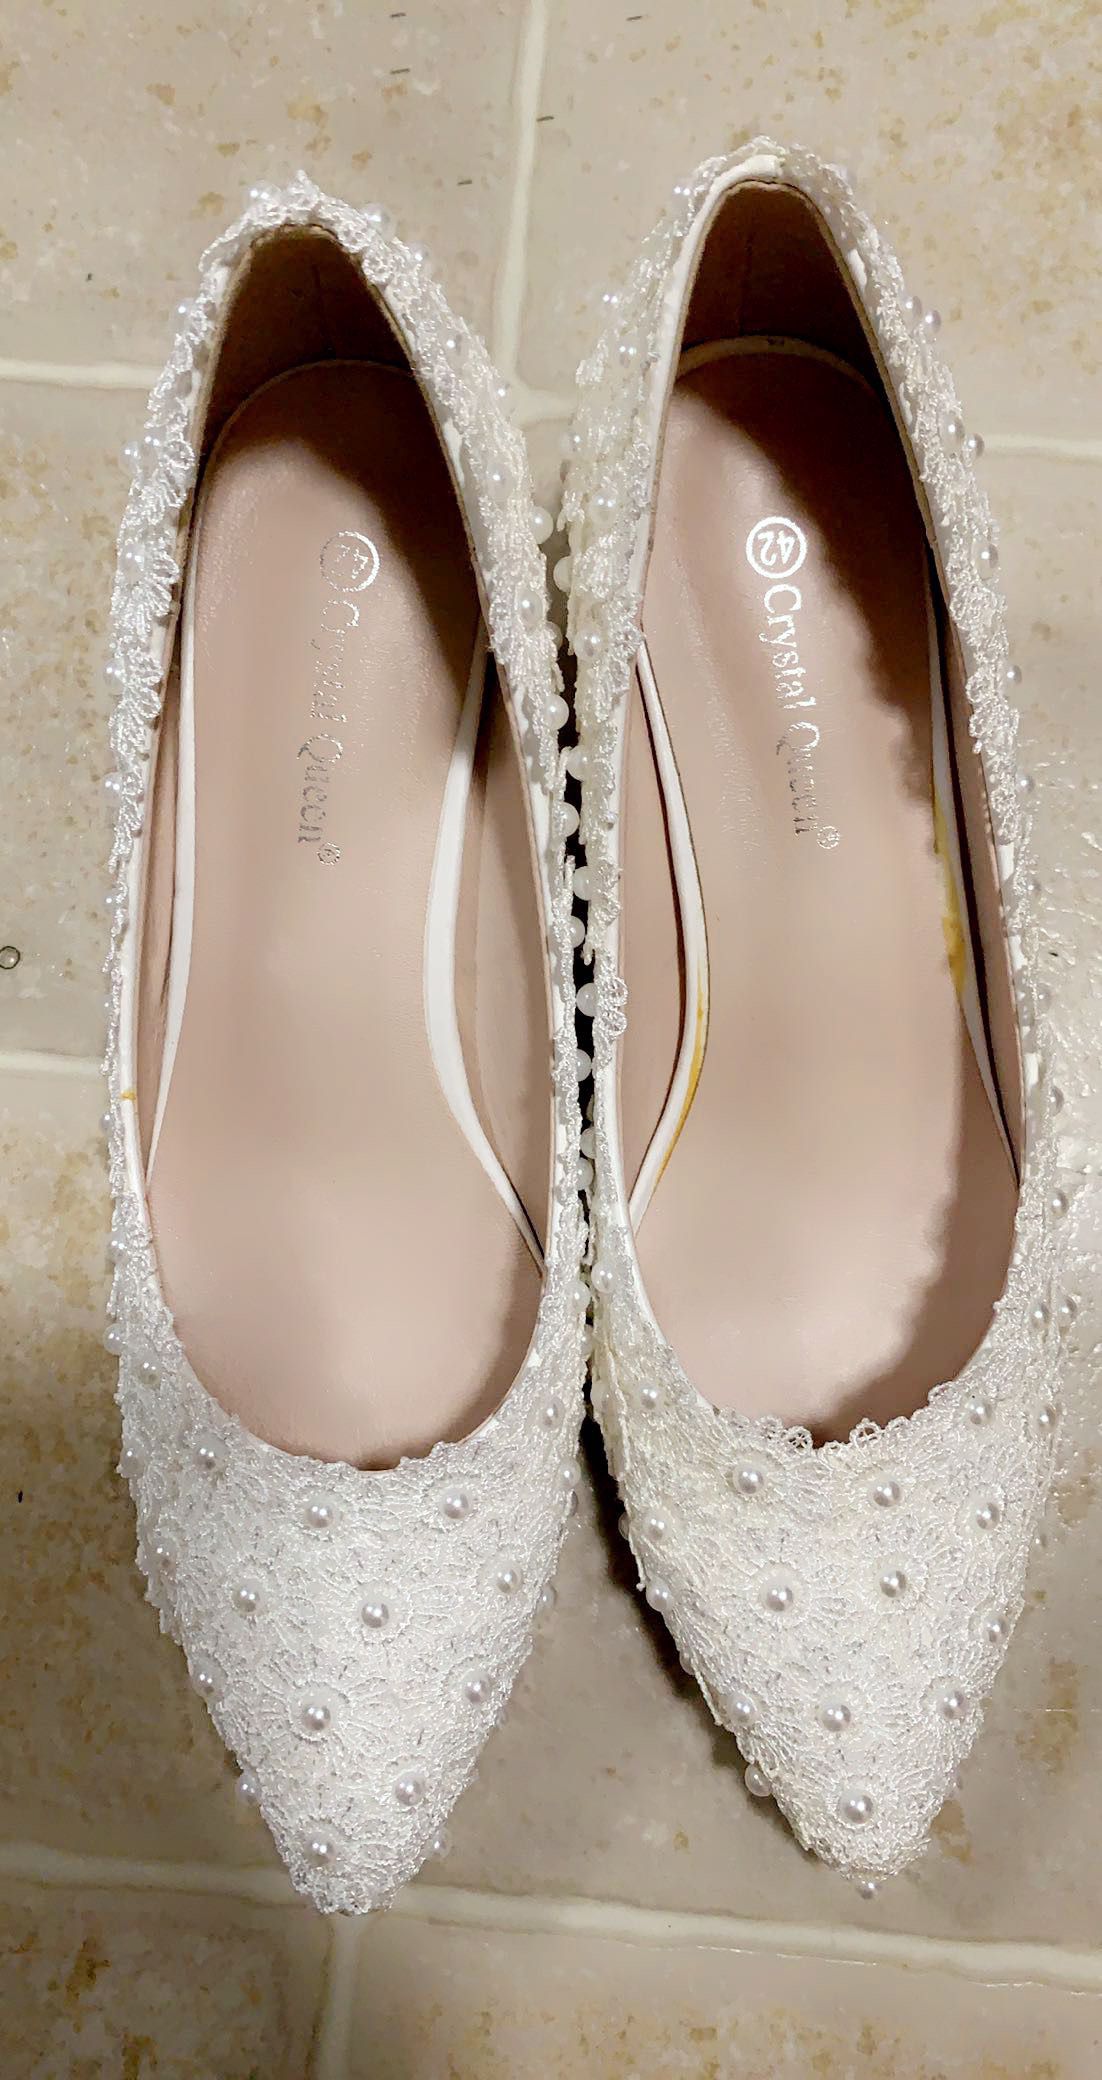 Crystal Queen wedding shoes